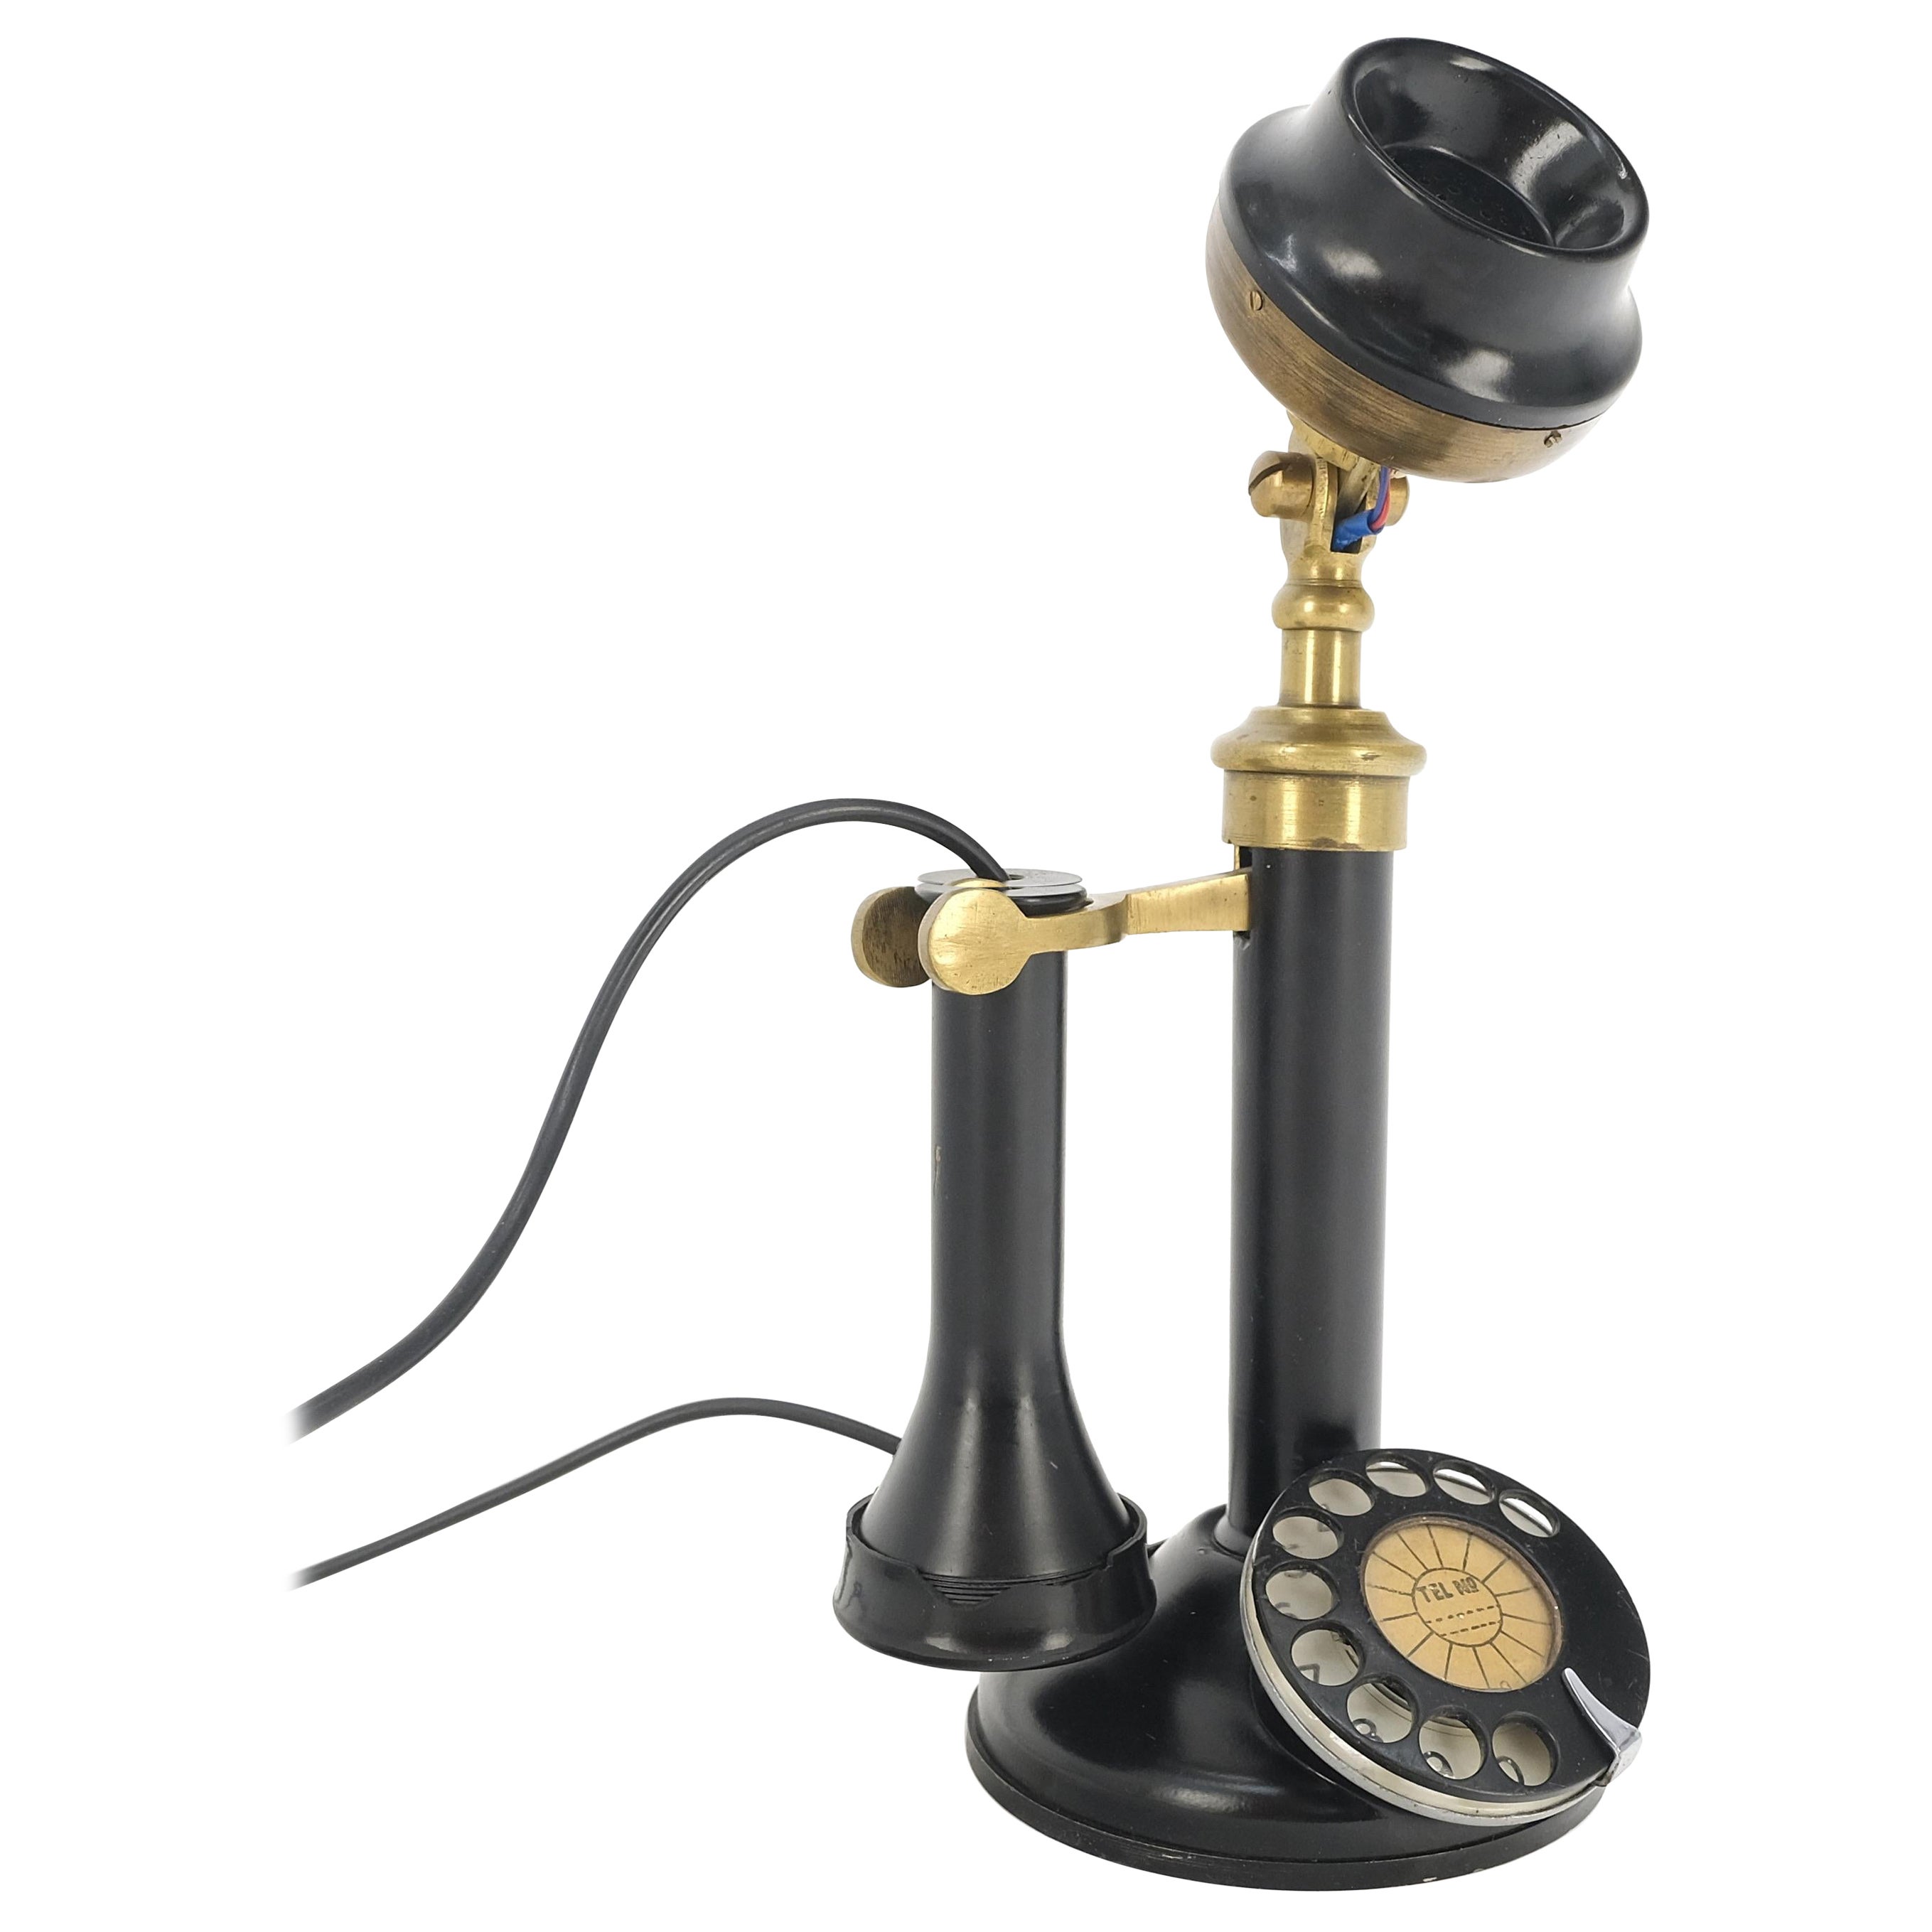 Who invented the Bakelite telephone?